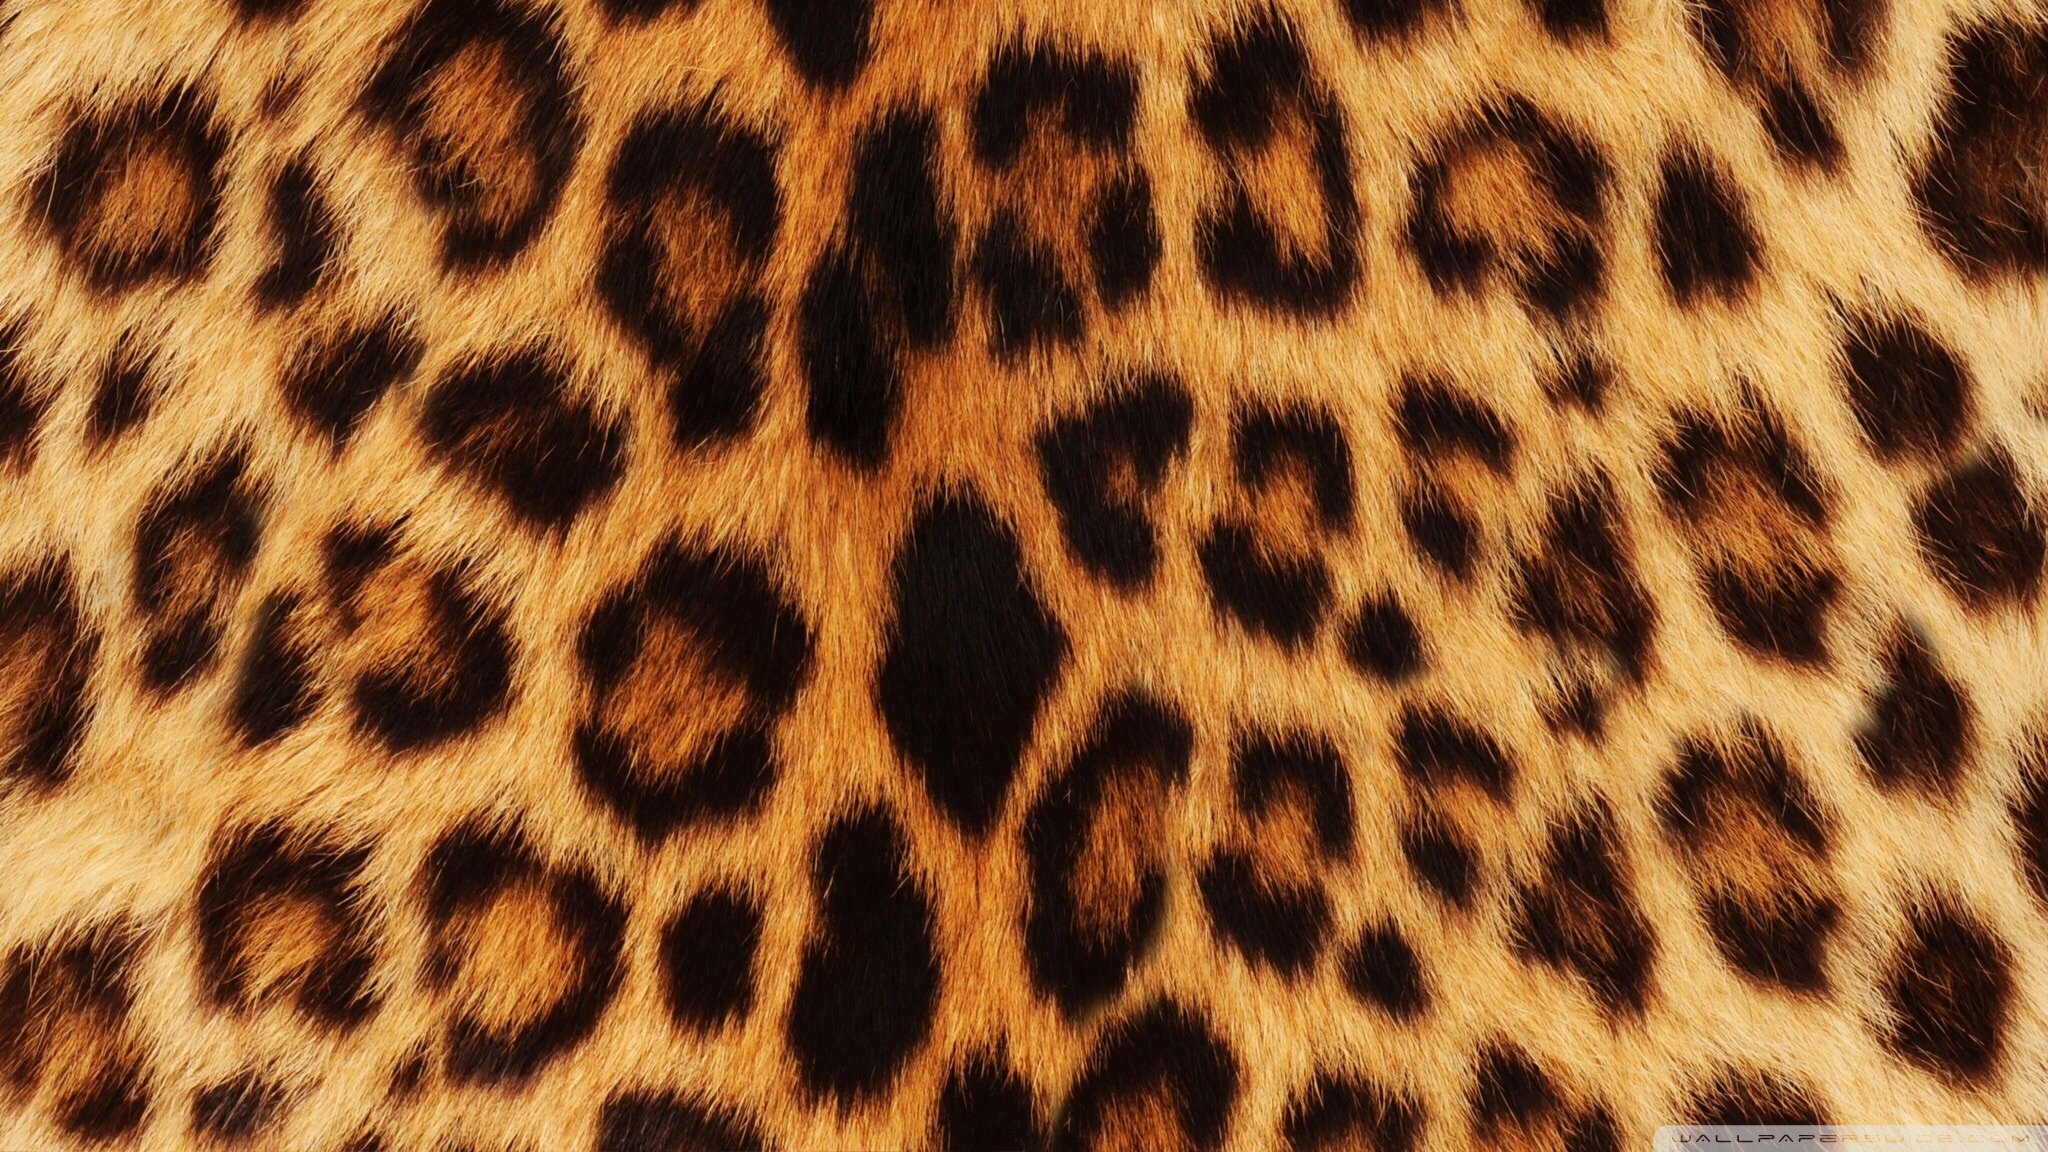 Leopard wallpaper, 1920x1080, 209651